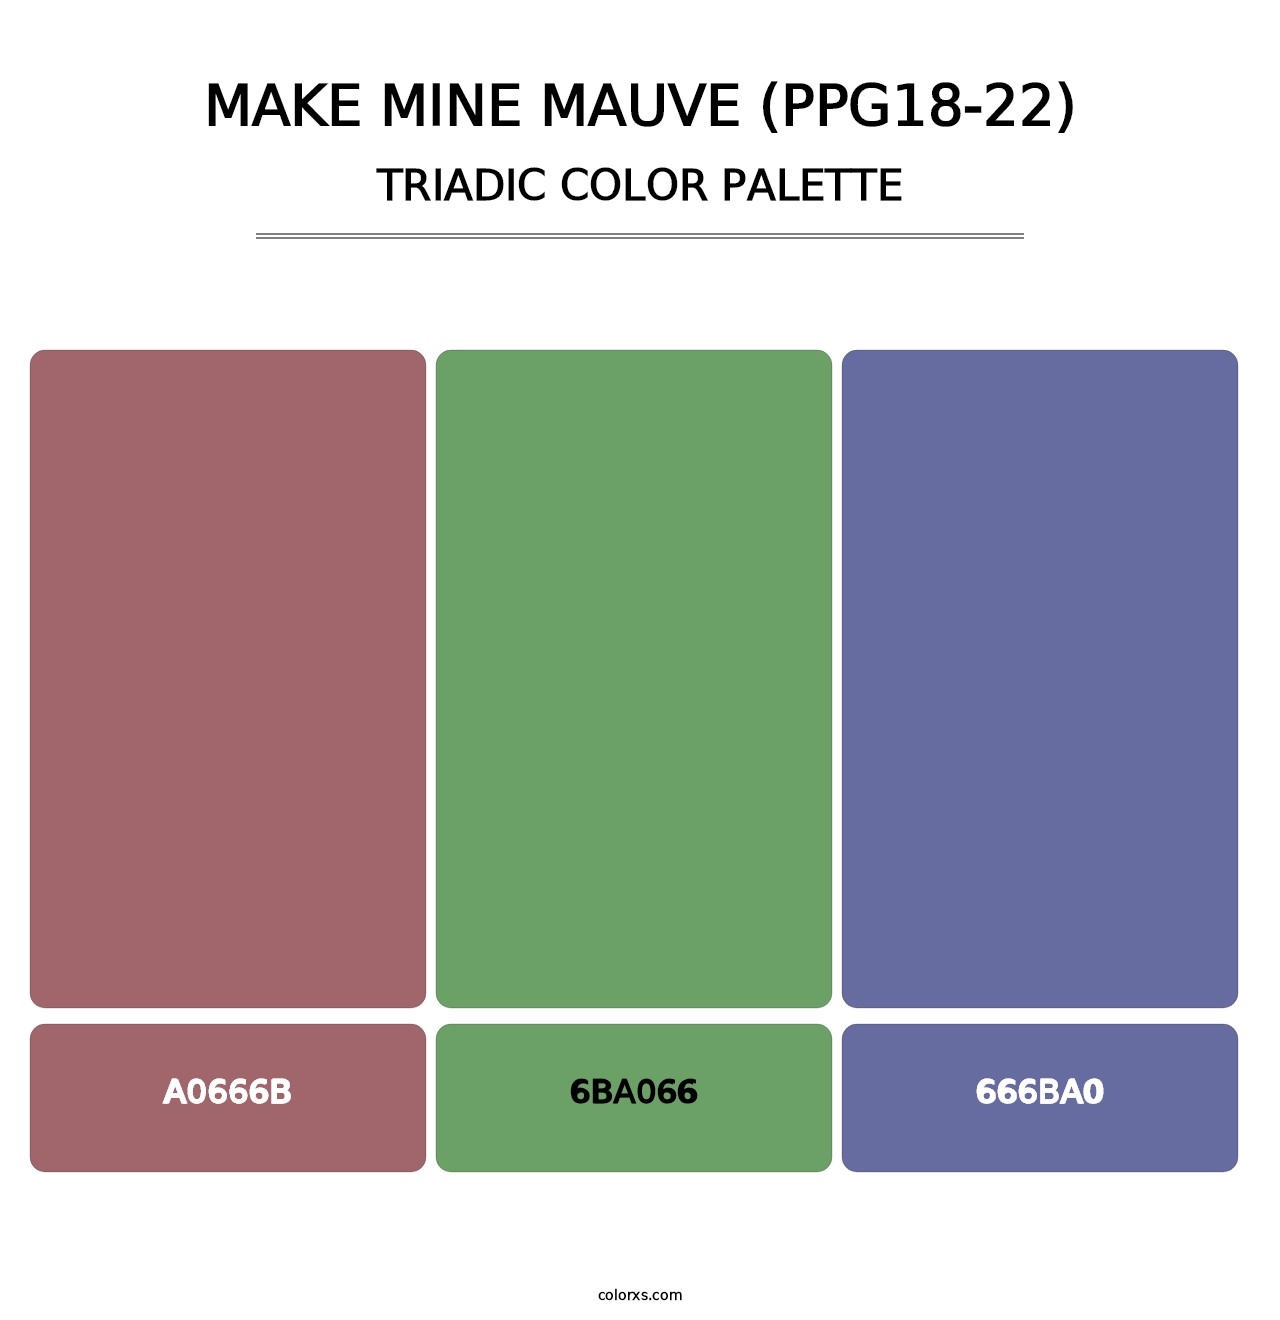 Make Mine Mauve (PPG18-22) - Triadic Color Palette